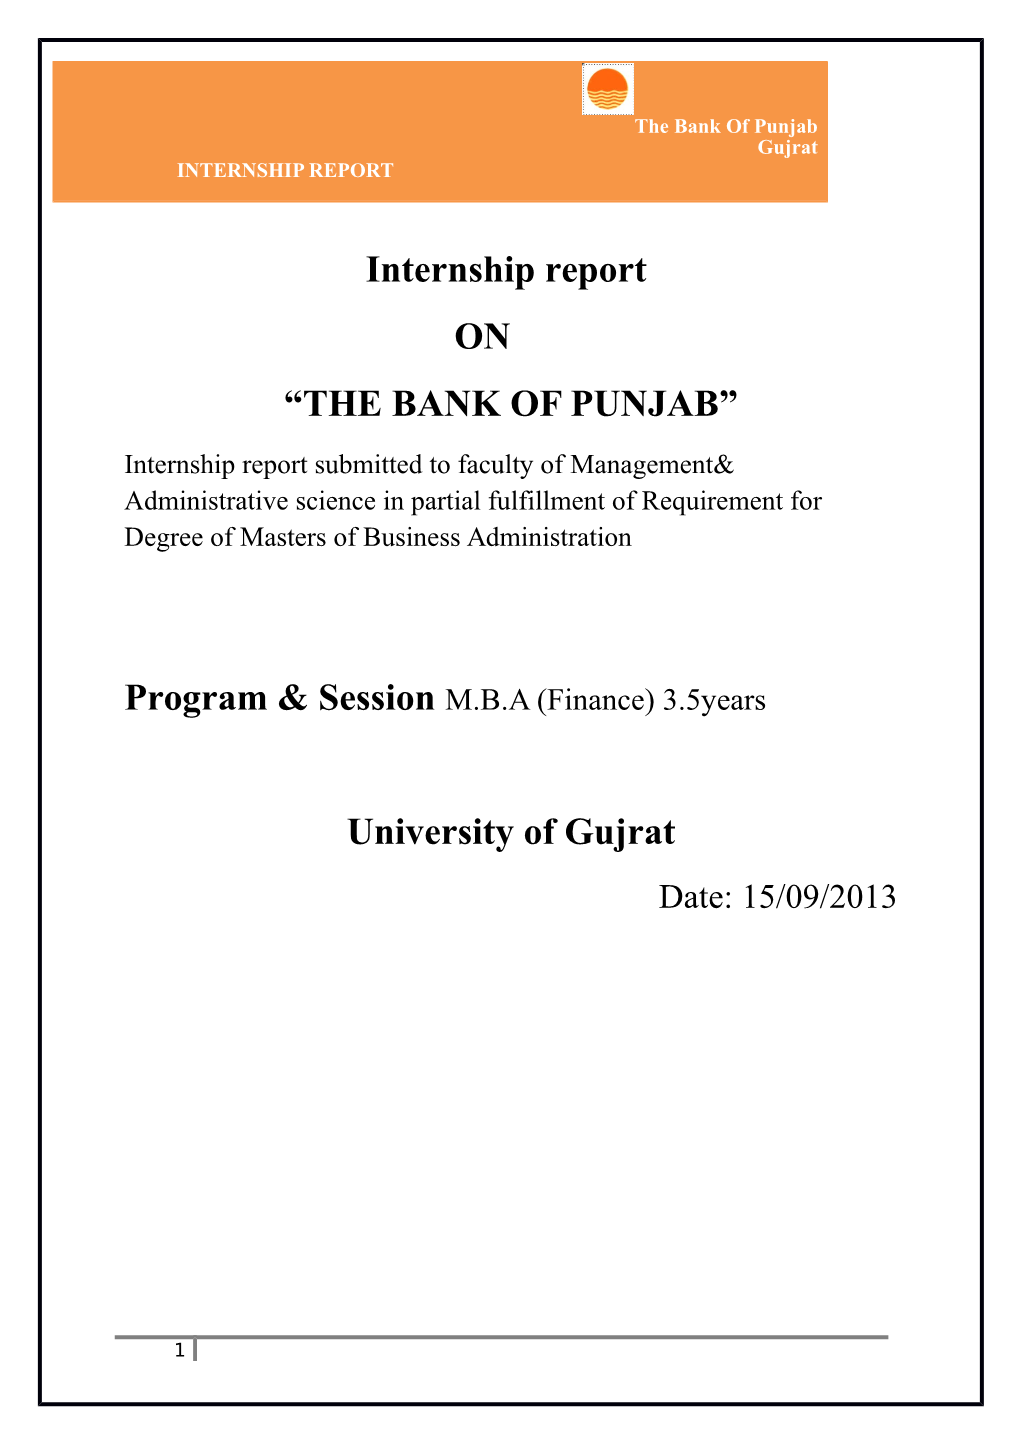 Internship Report on “THE BANK of PUNJAB” University of Gujrat